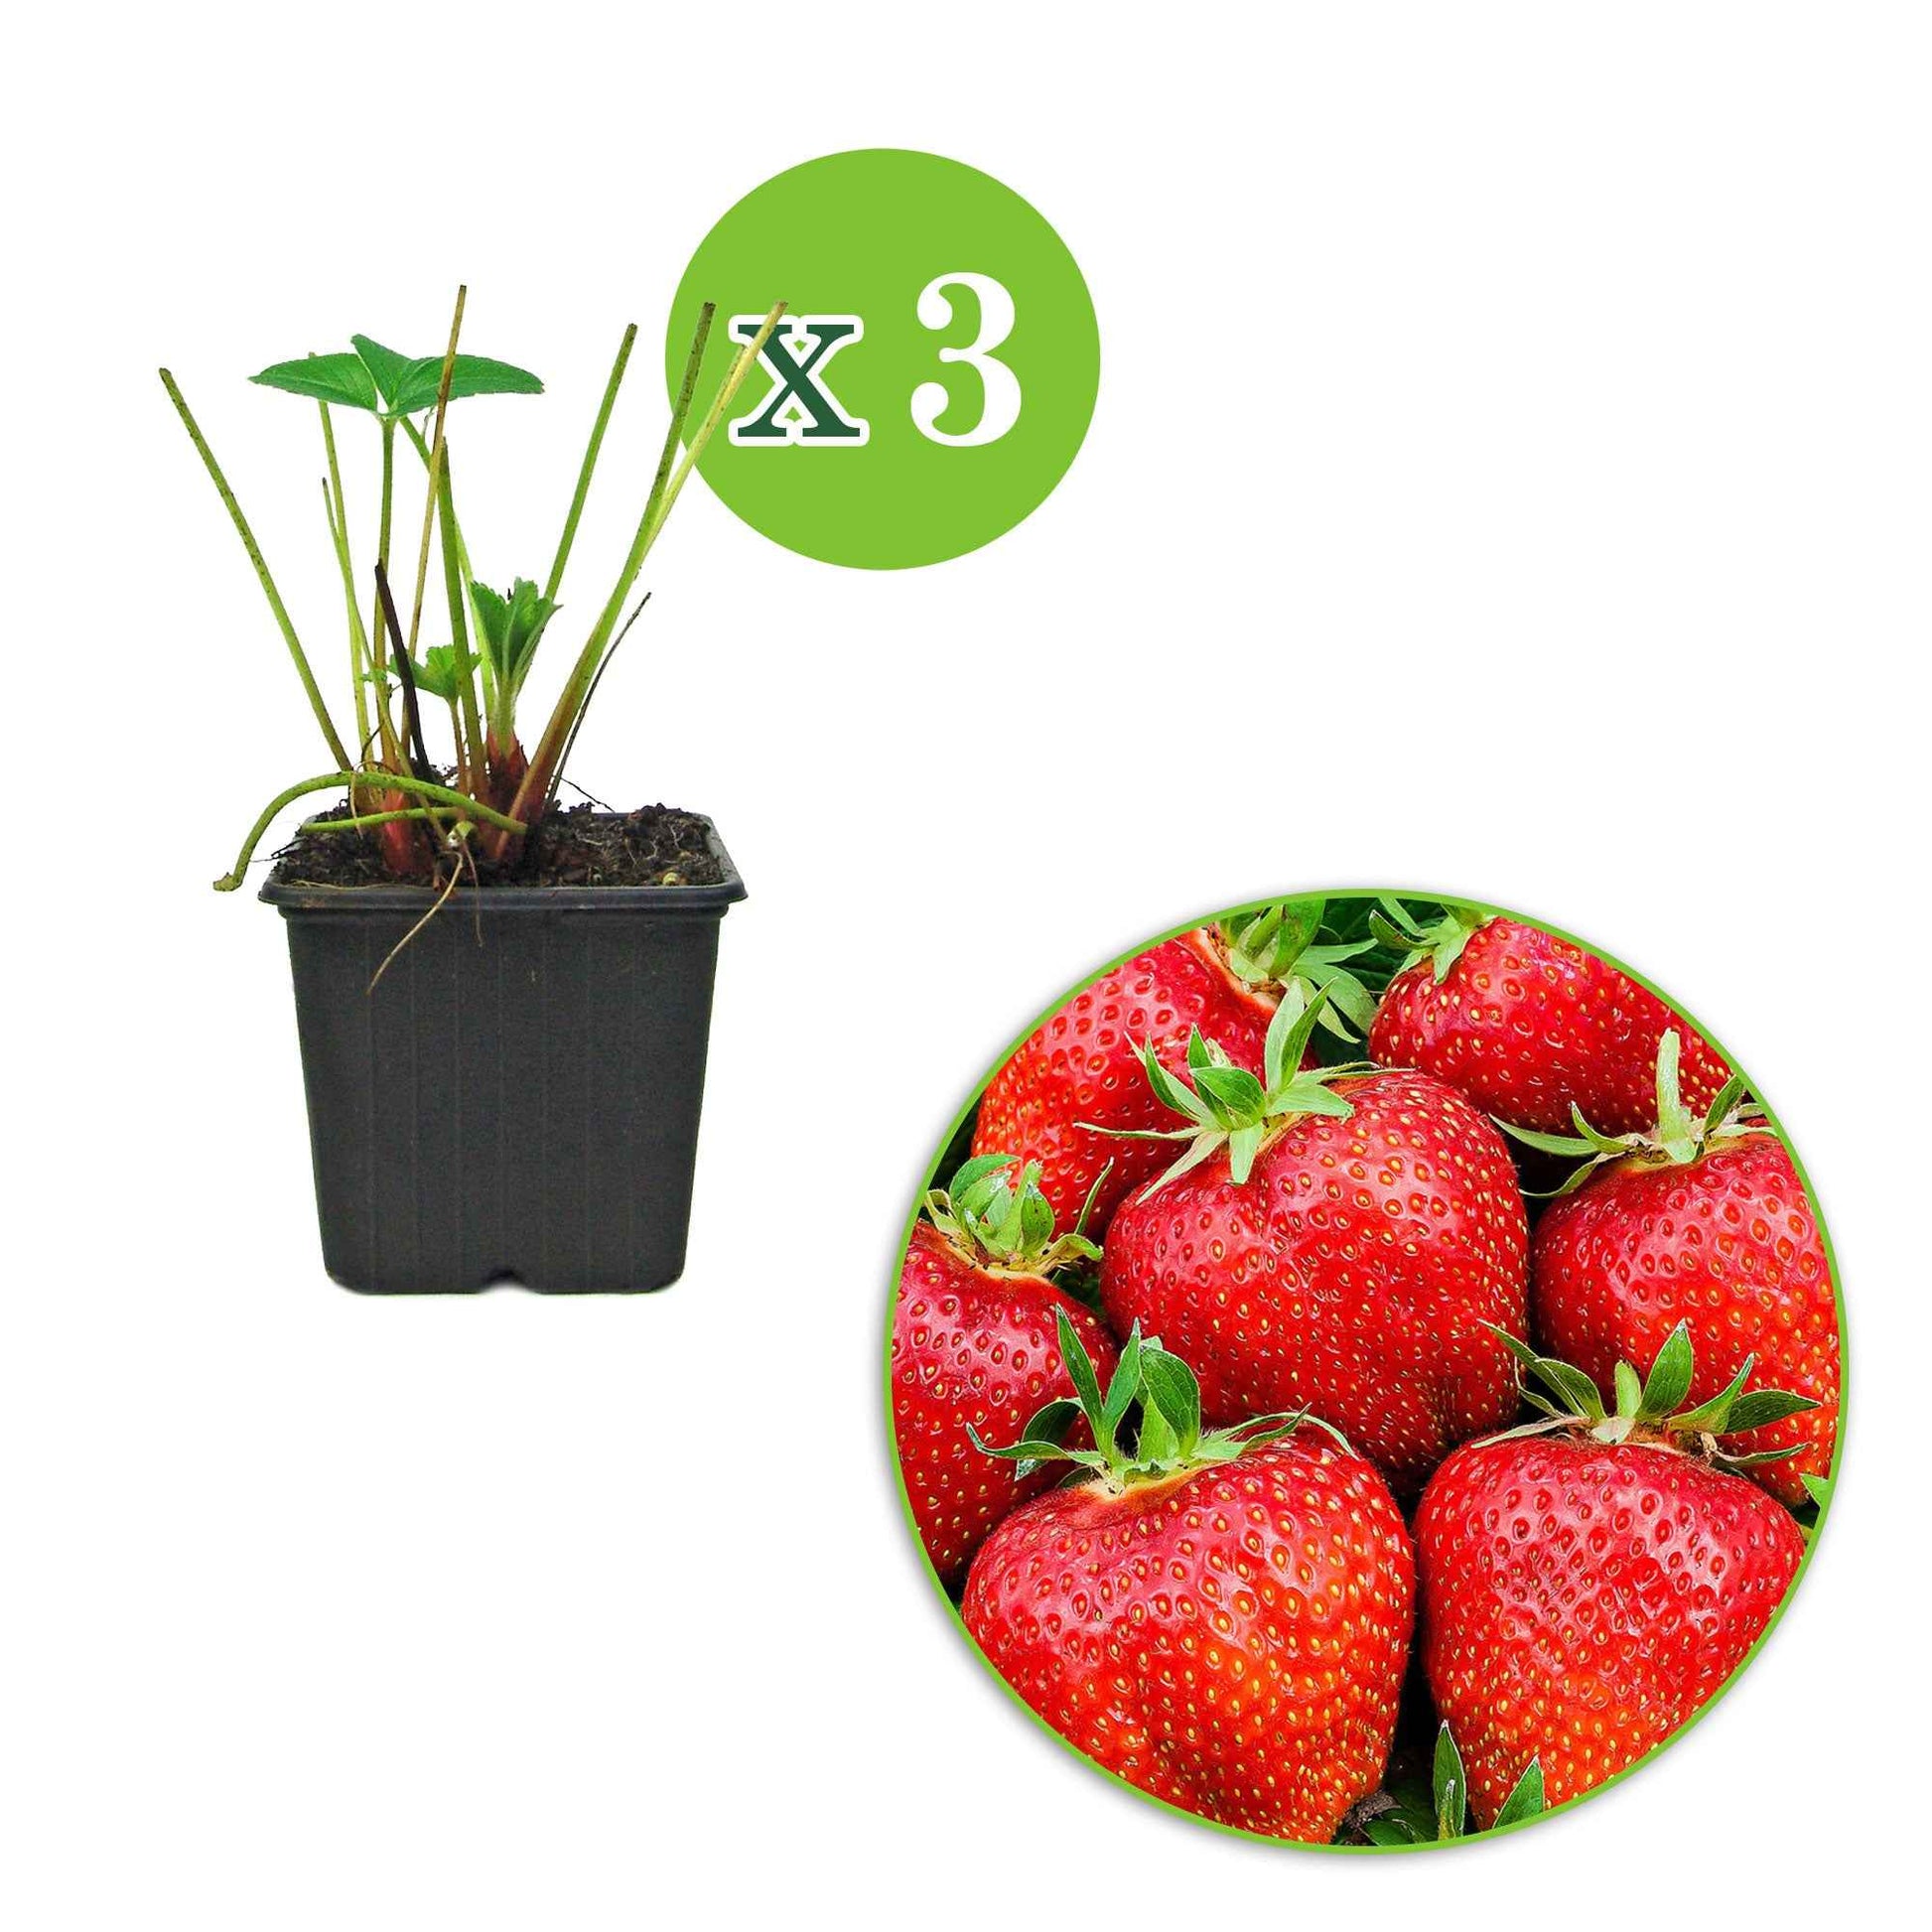 3x Kletter-Erdbeere Fragaria 'Bakker's Kingsize' - Gemüse für die Terrasse